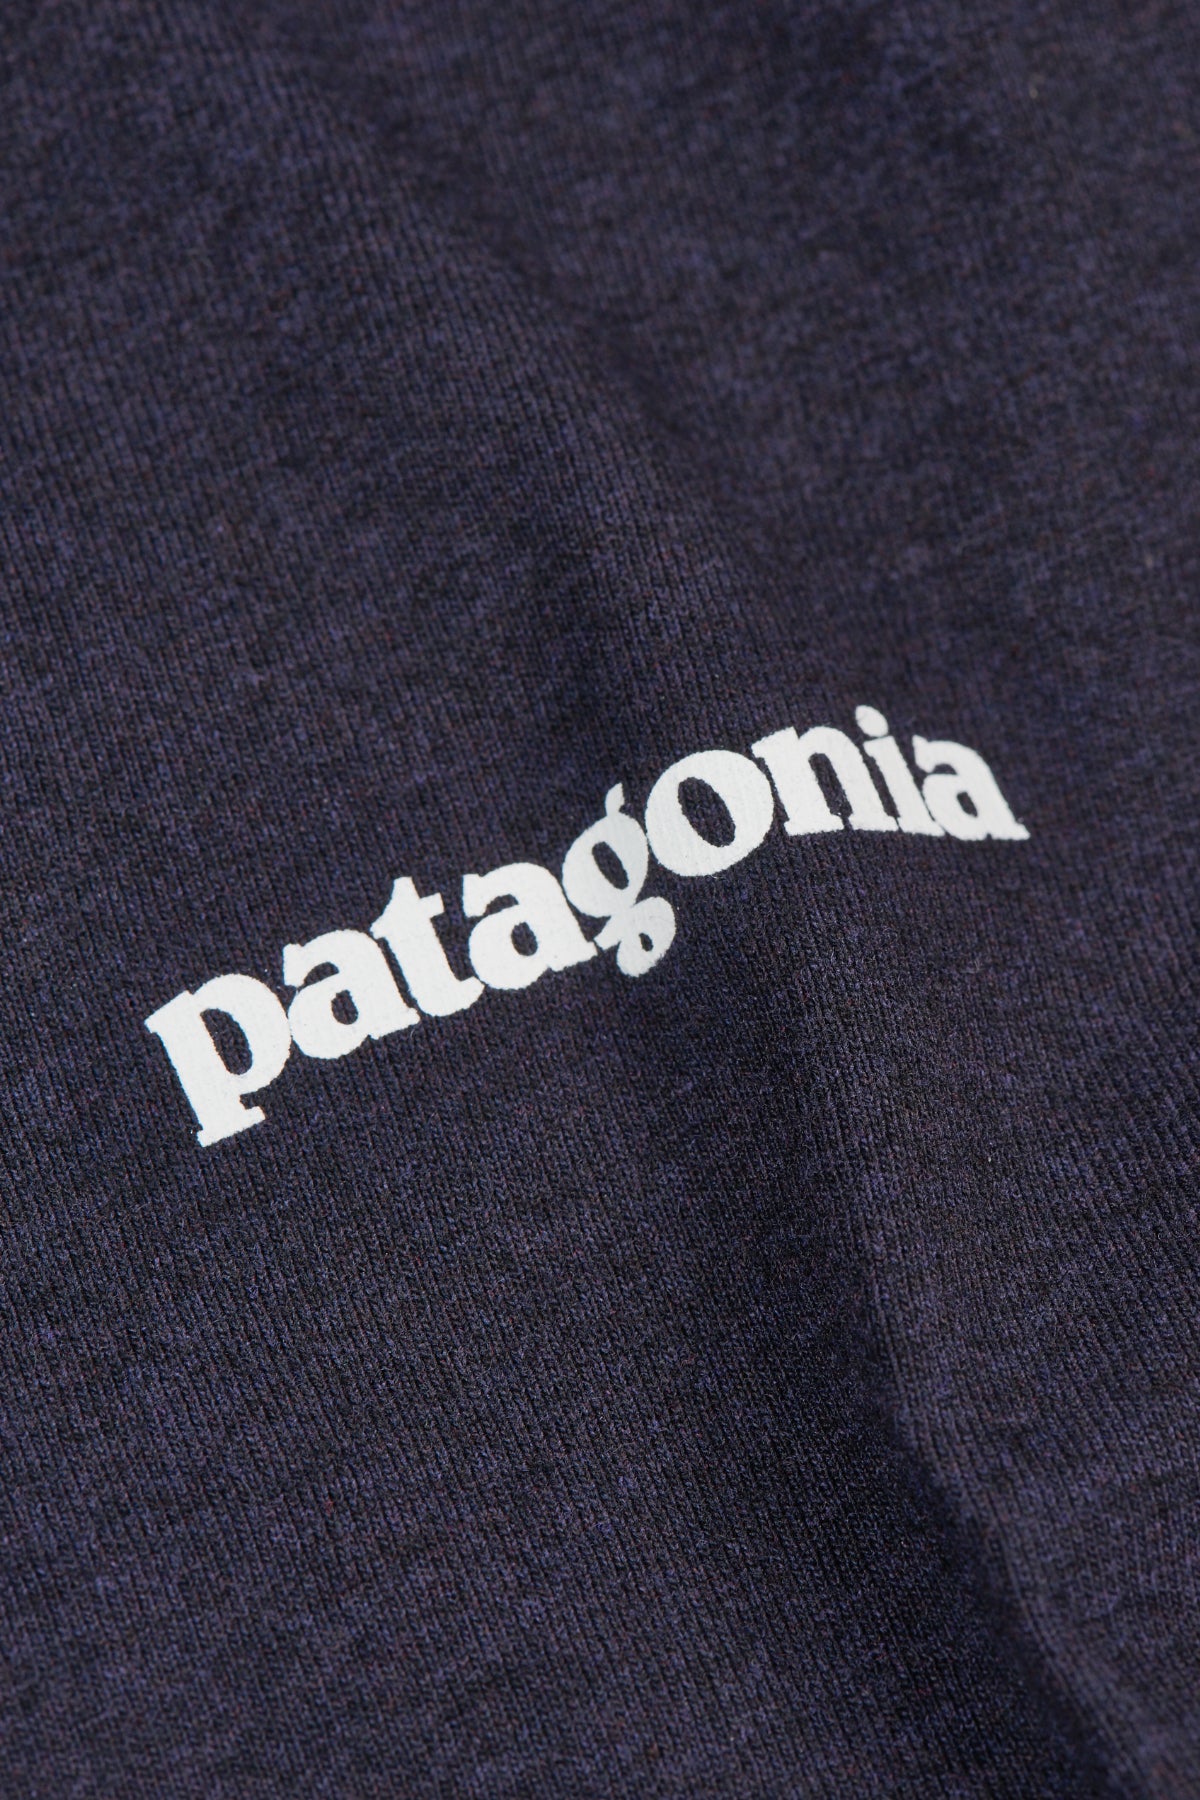 patagonia - P-6 logo Responsibili-Tee